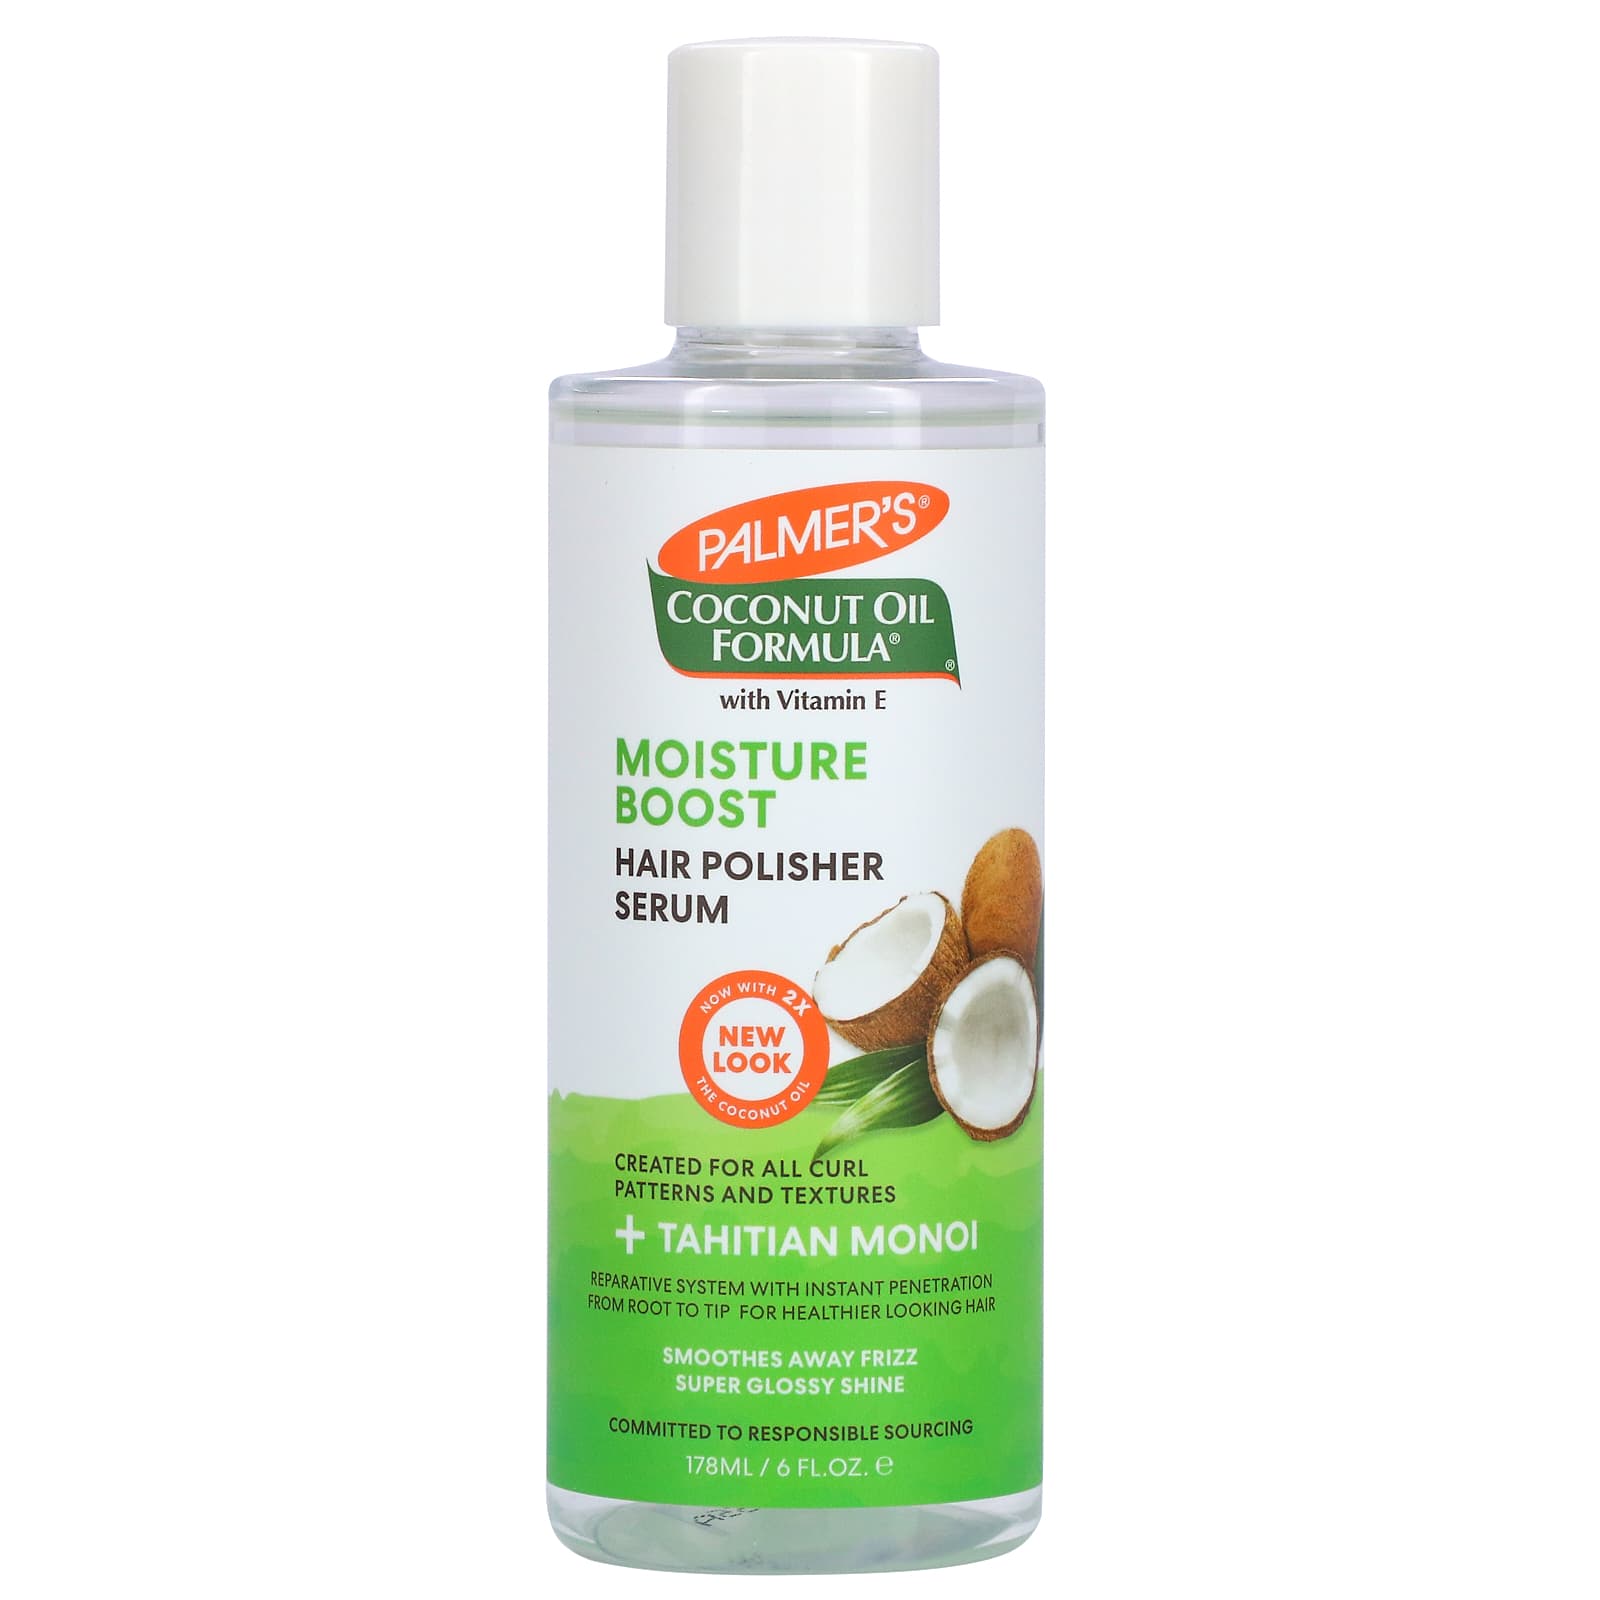 Palmers, Coconut Oil Formula, Moisture Boost Hair Polisher Serum, 6 fl oz  (178 ml)